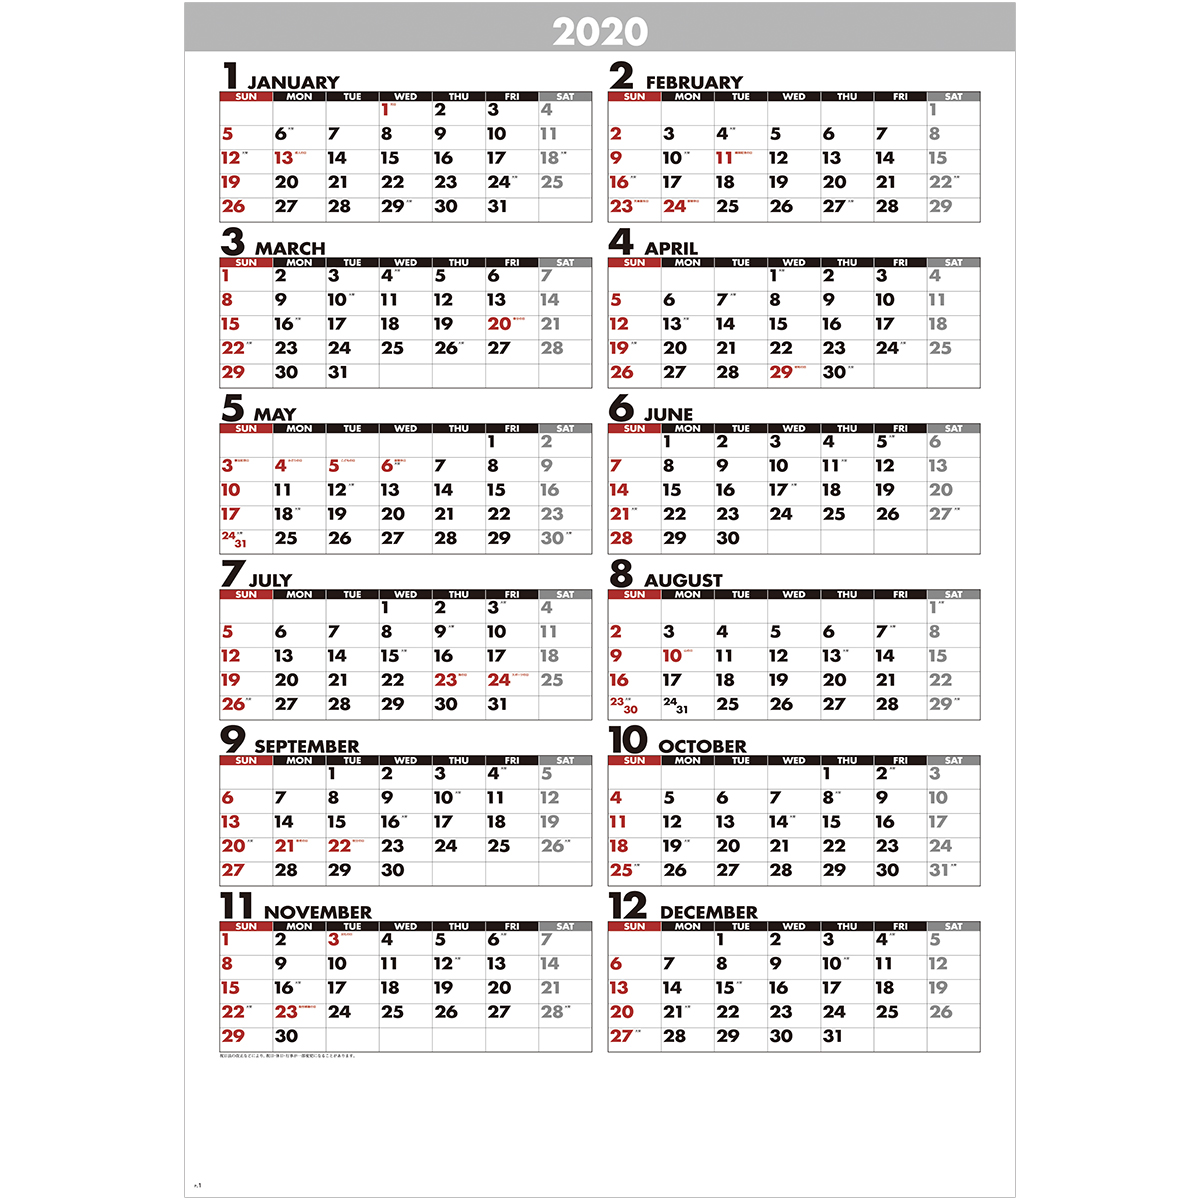 Sg549 シンプルジャンボカレンダー 年表付 スリーマンス 2020